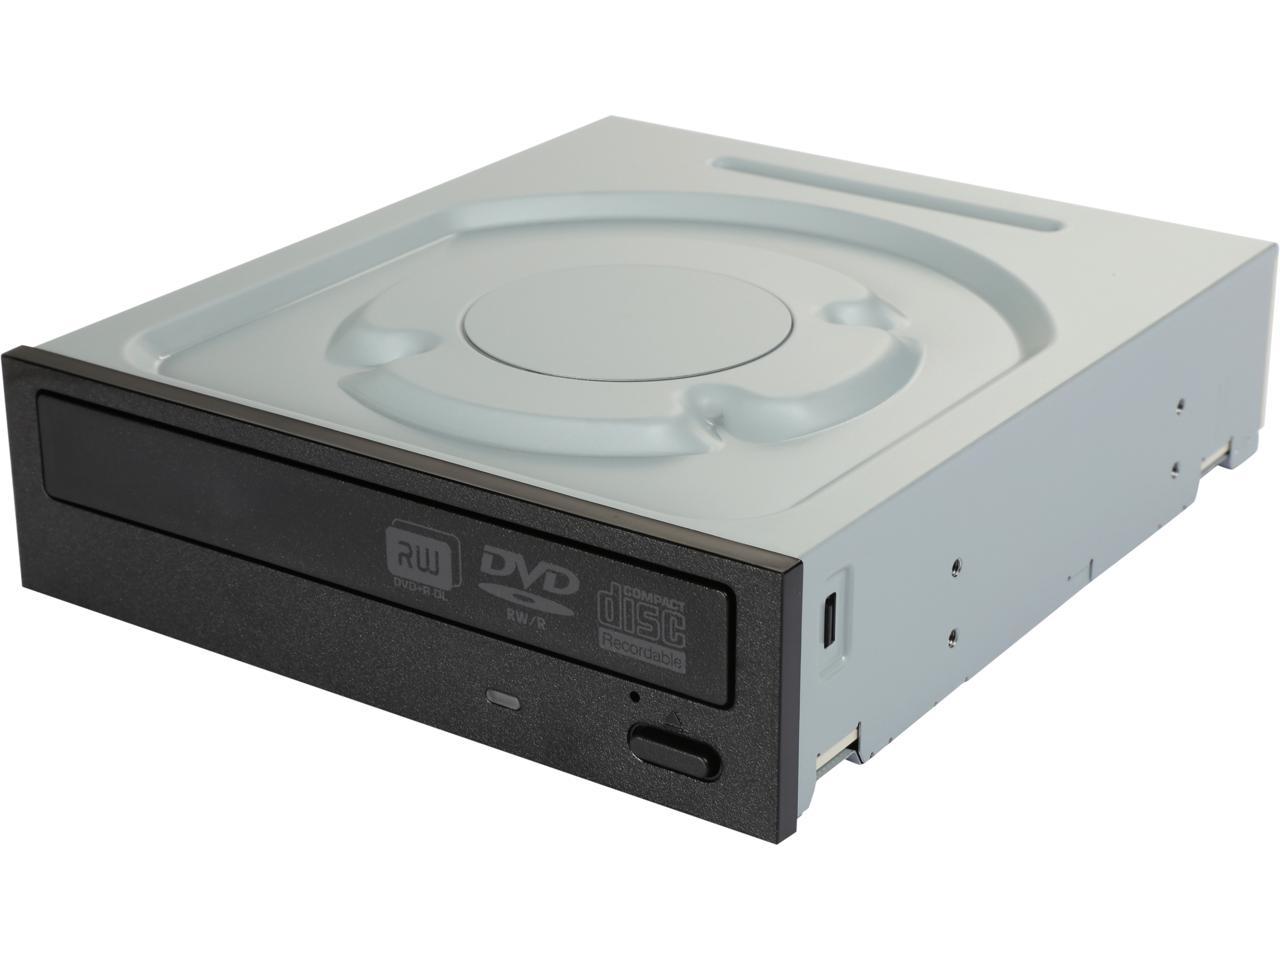 Optiarc High Speed DVD RW Drive with DVD+R DL OverBurn to 8.7 GB Black SATA  Model AD-5290S-PLUS - Newegg.com